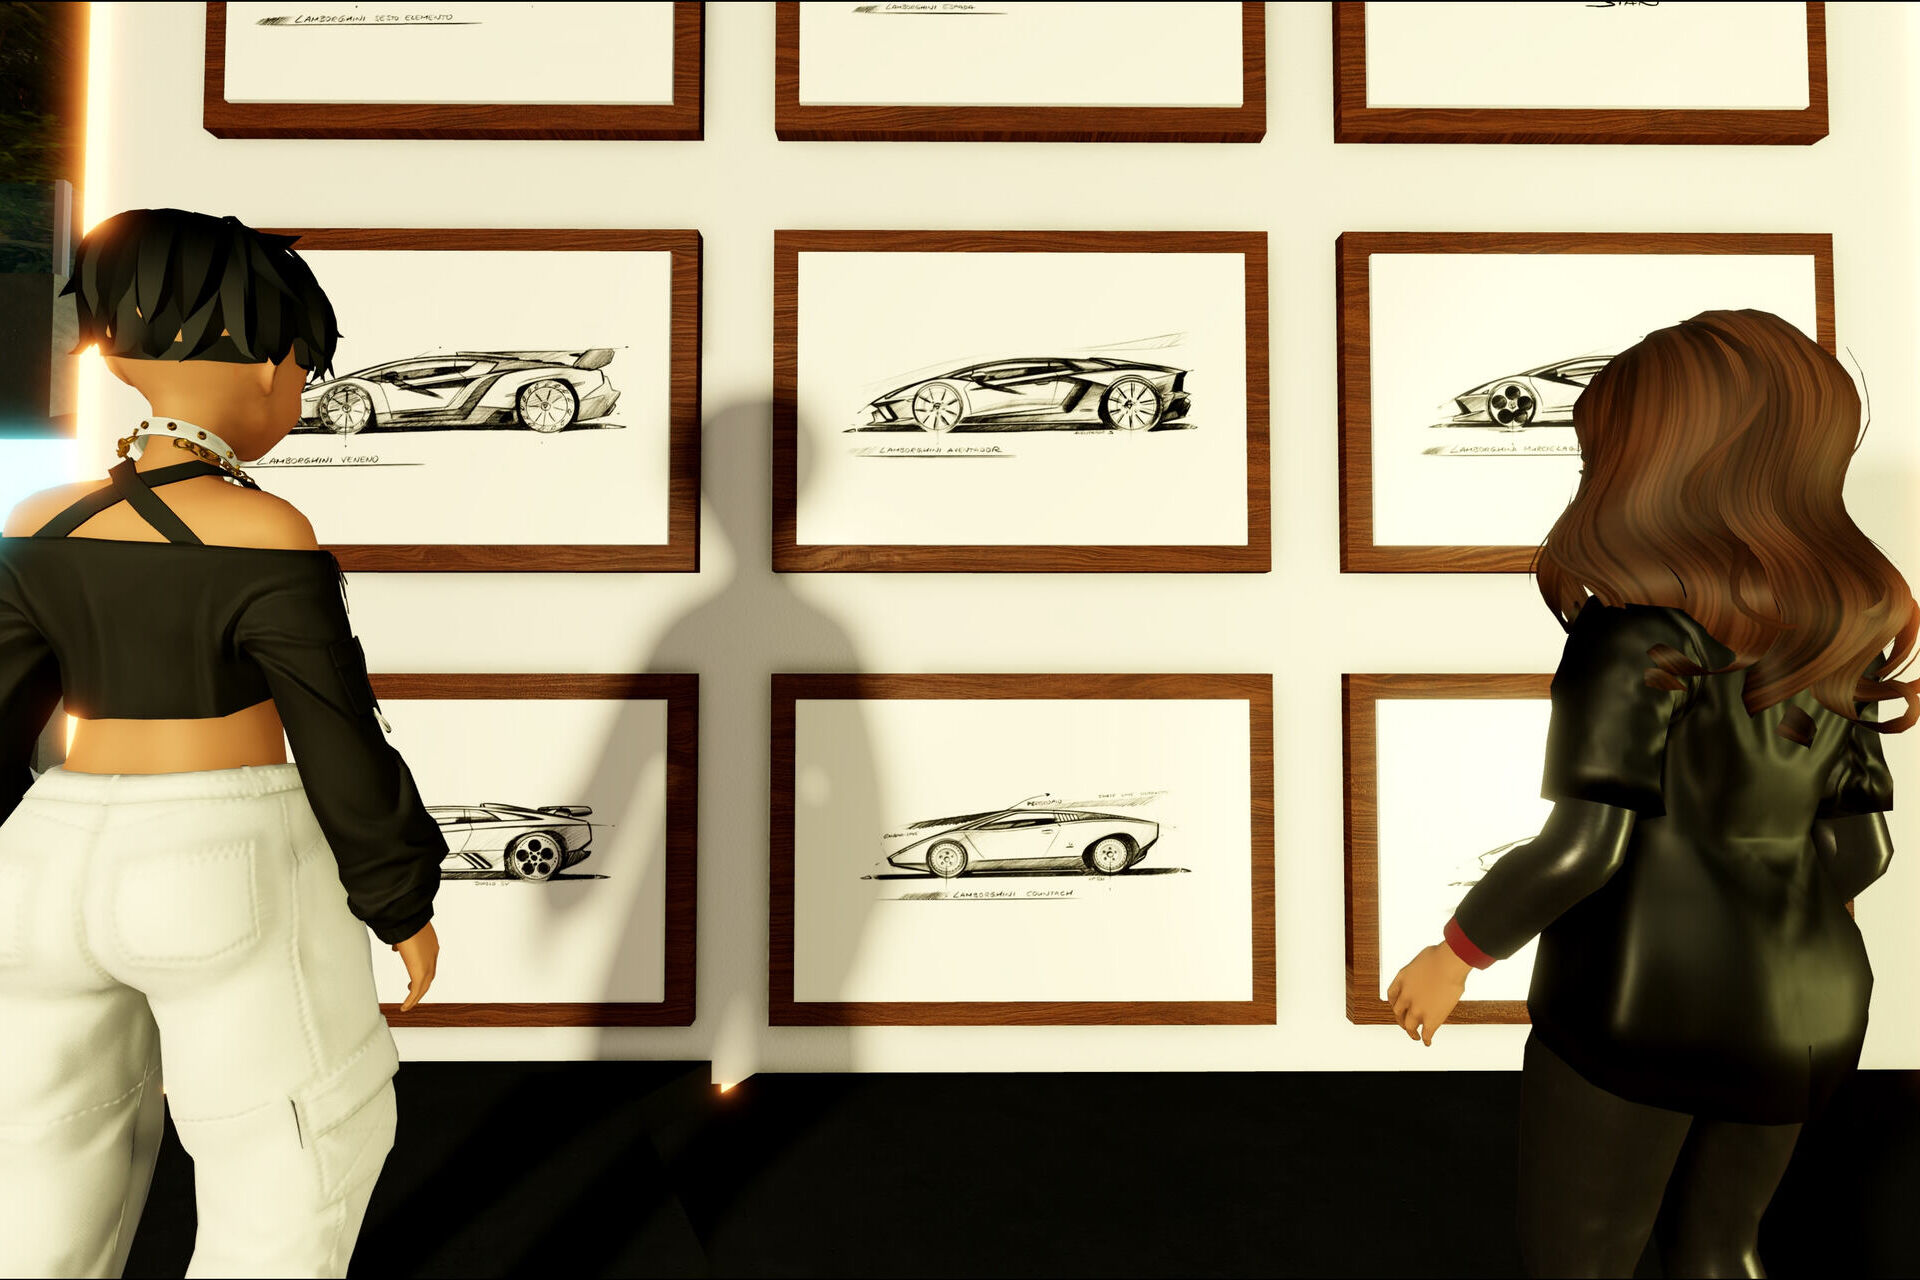 Lanzador: Automobili Lamborghinijev električni superauto nalazi se na Robloxu, 3D impresivnoj platformi